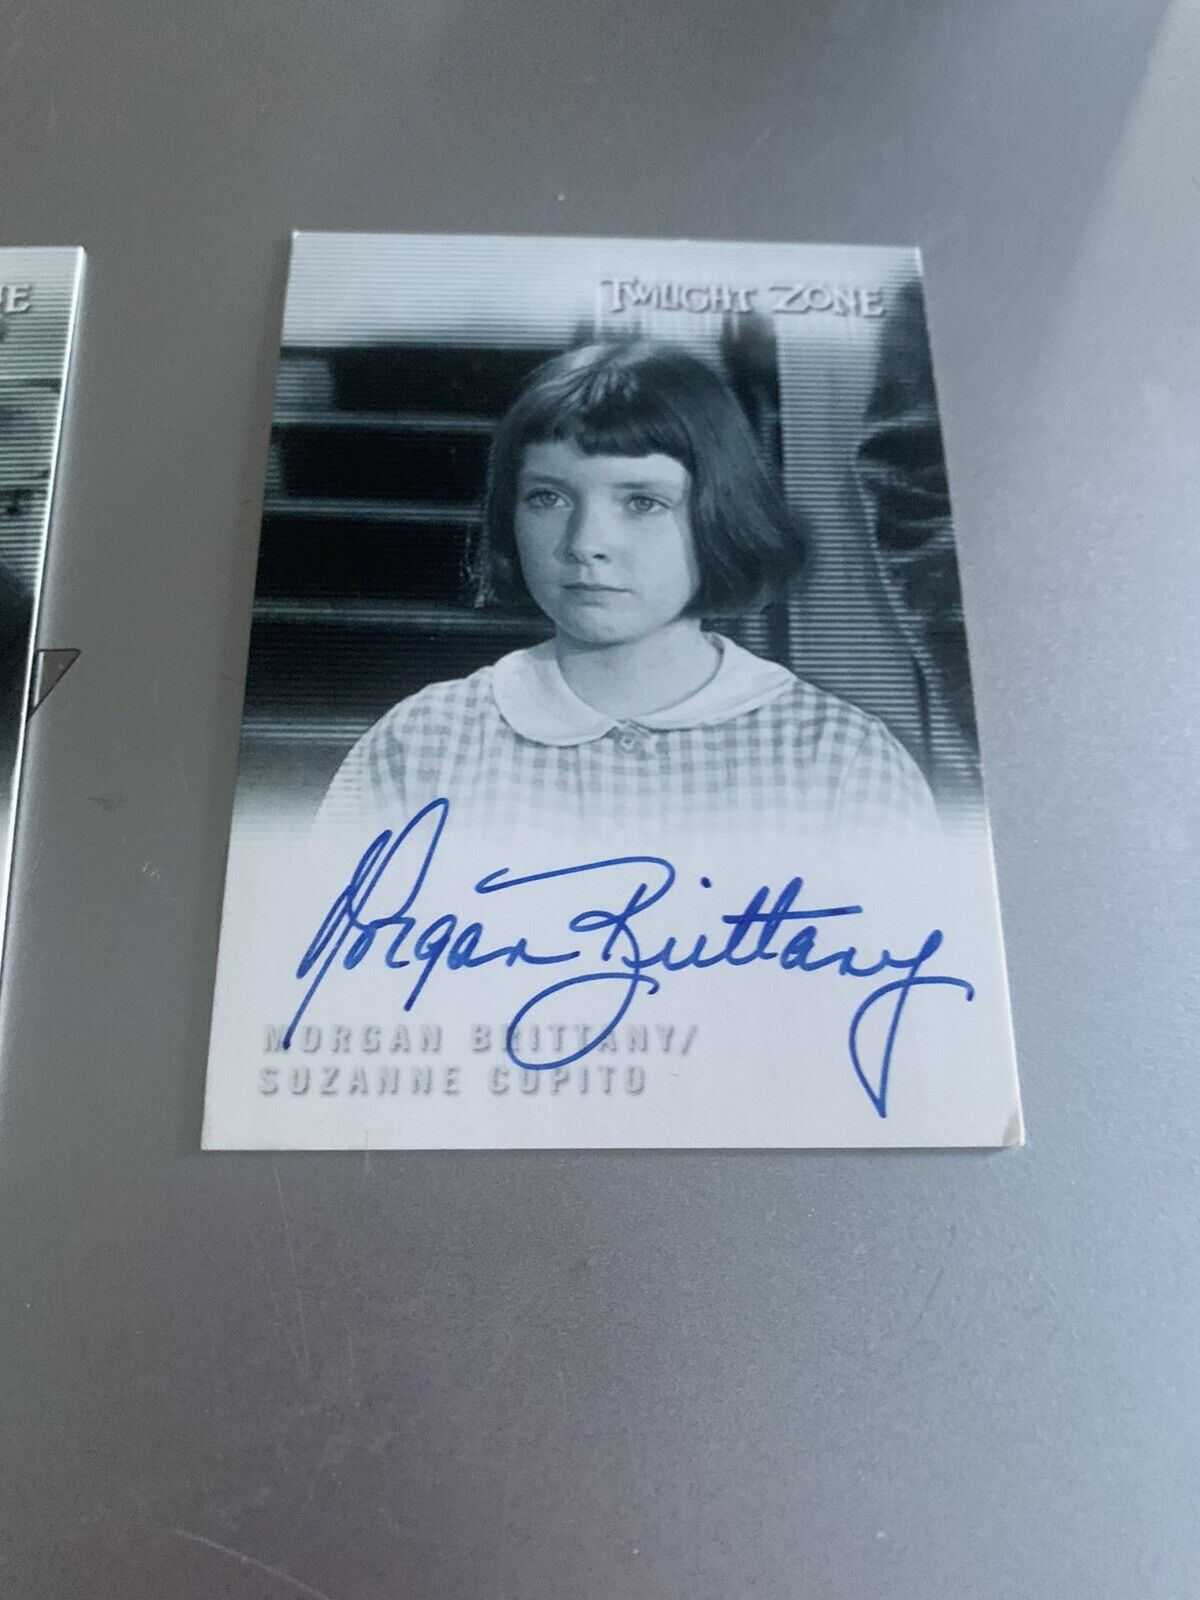 2009 Complete Twilight Zone 50th Anniversary Morgan Brittany A98 autograph card